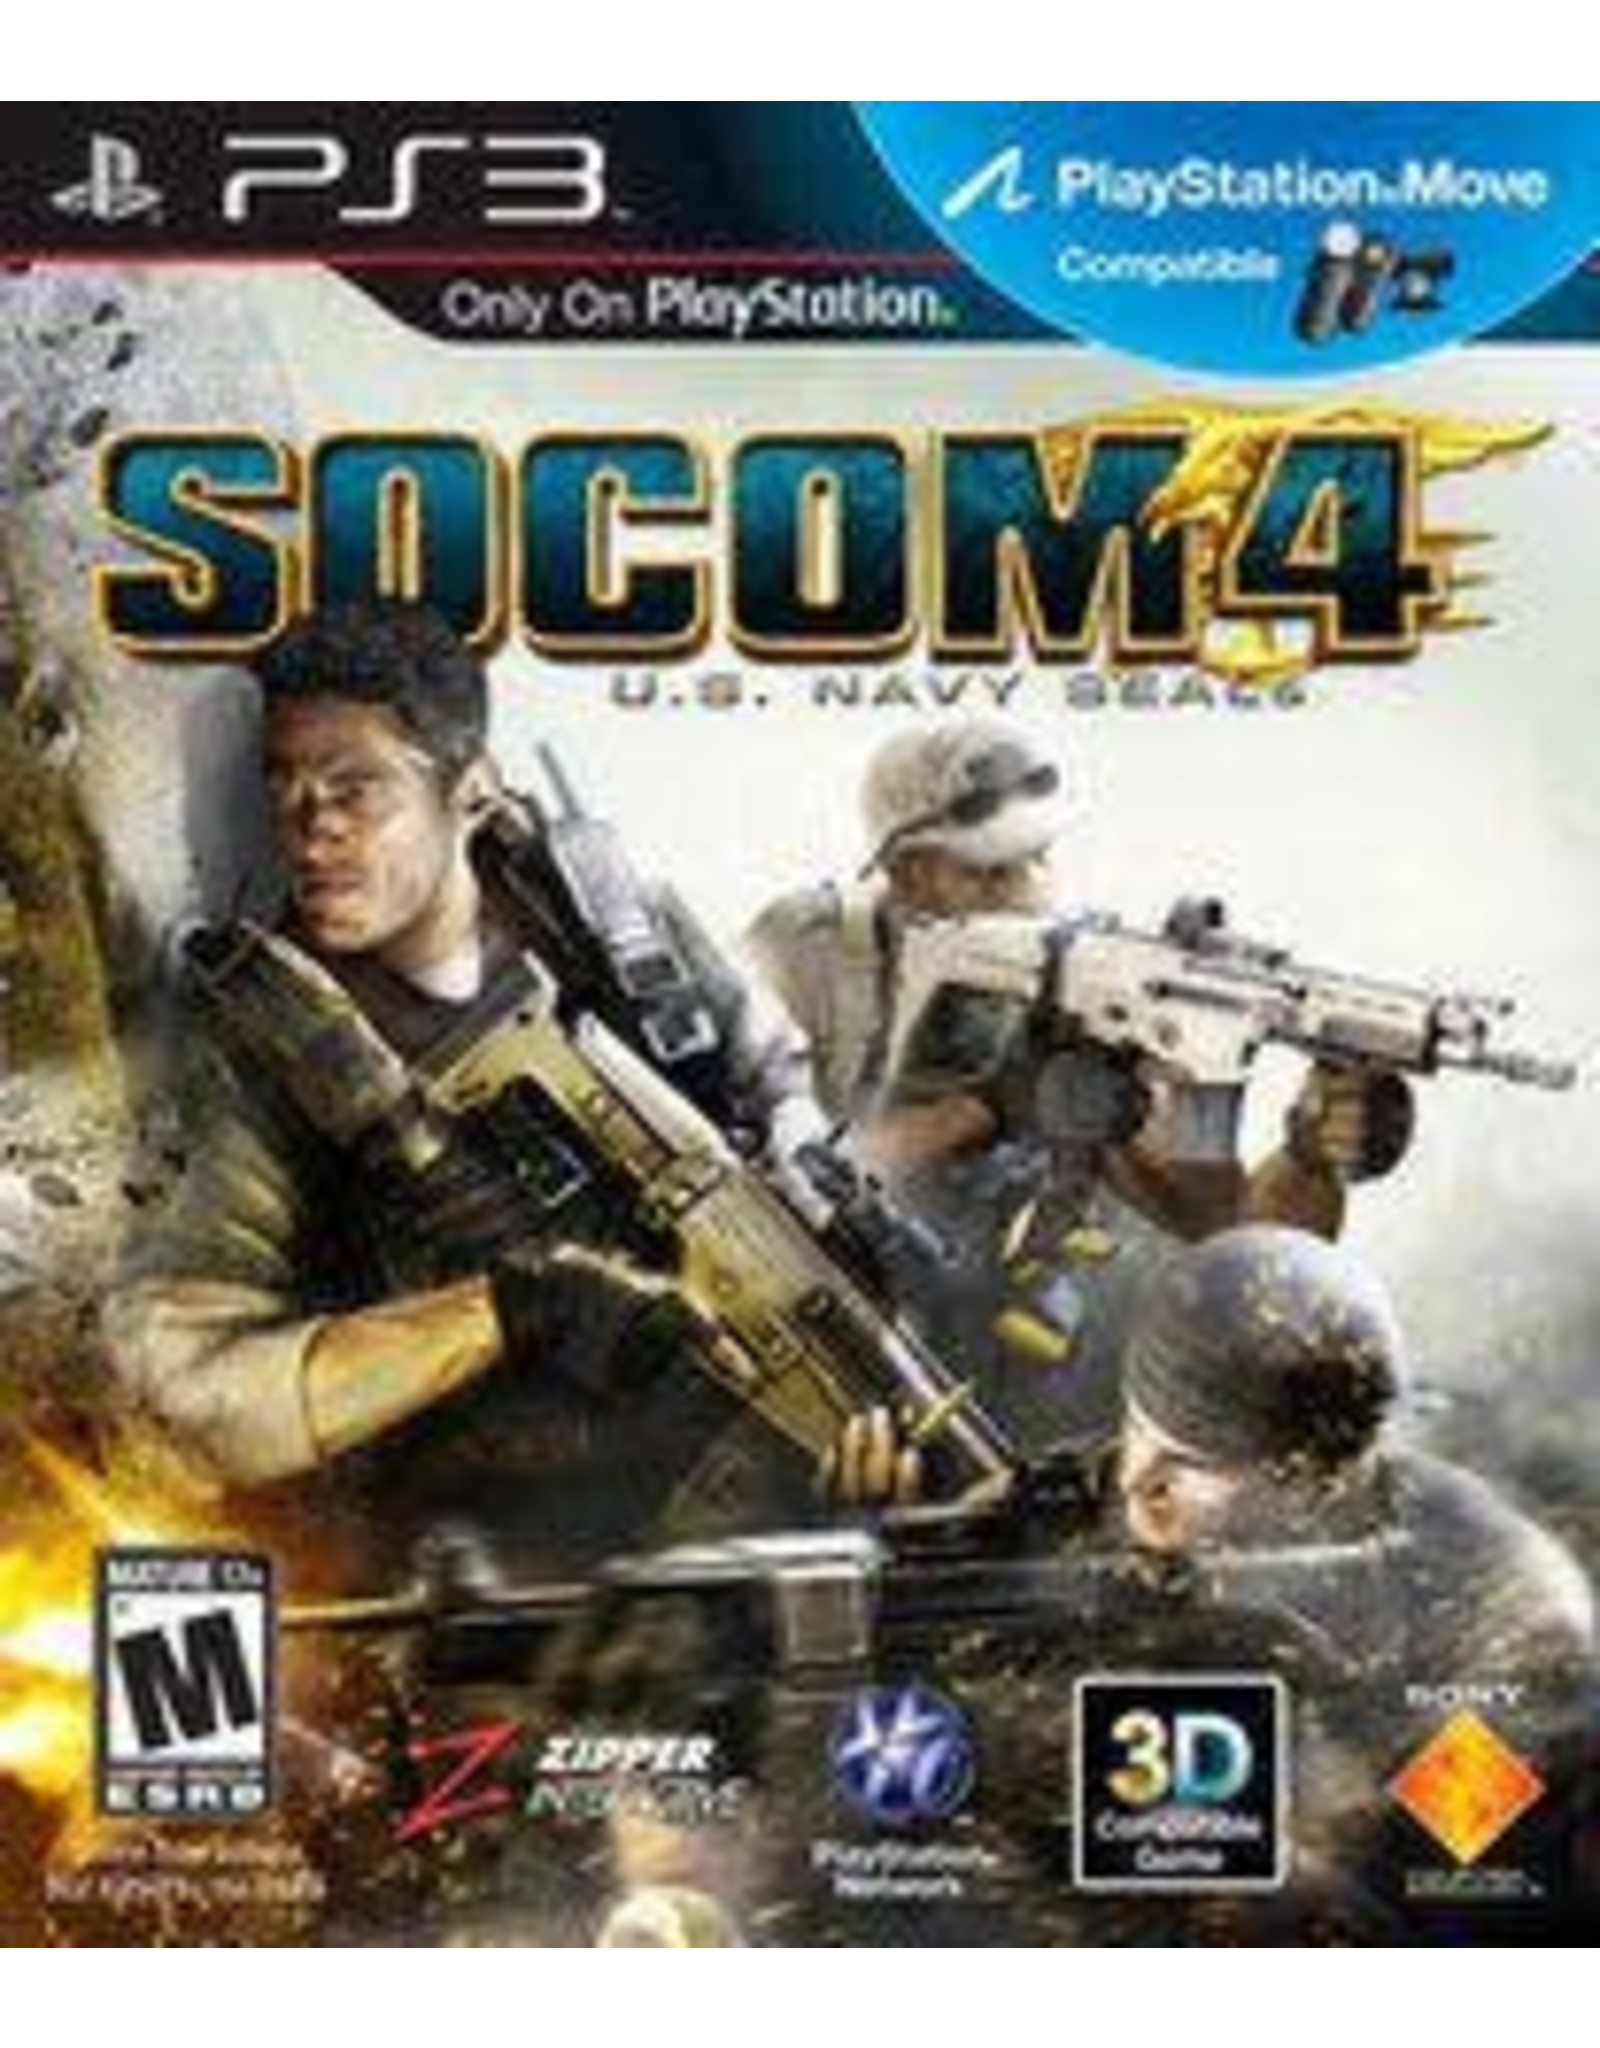 Playstation 3 Socom 4 (No Manual)